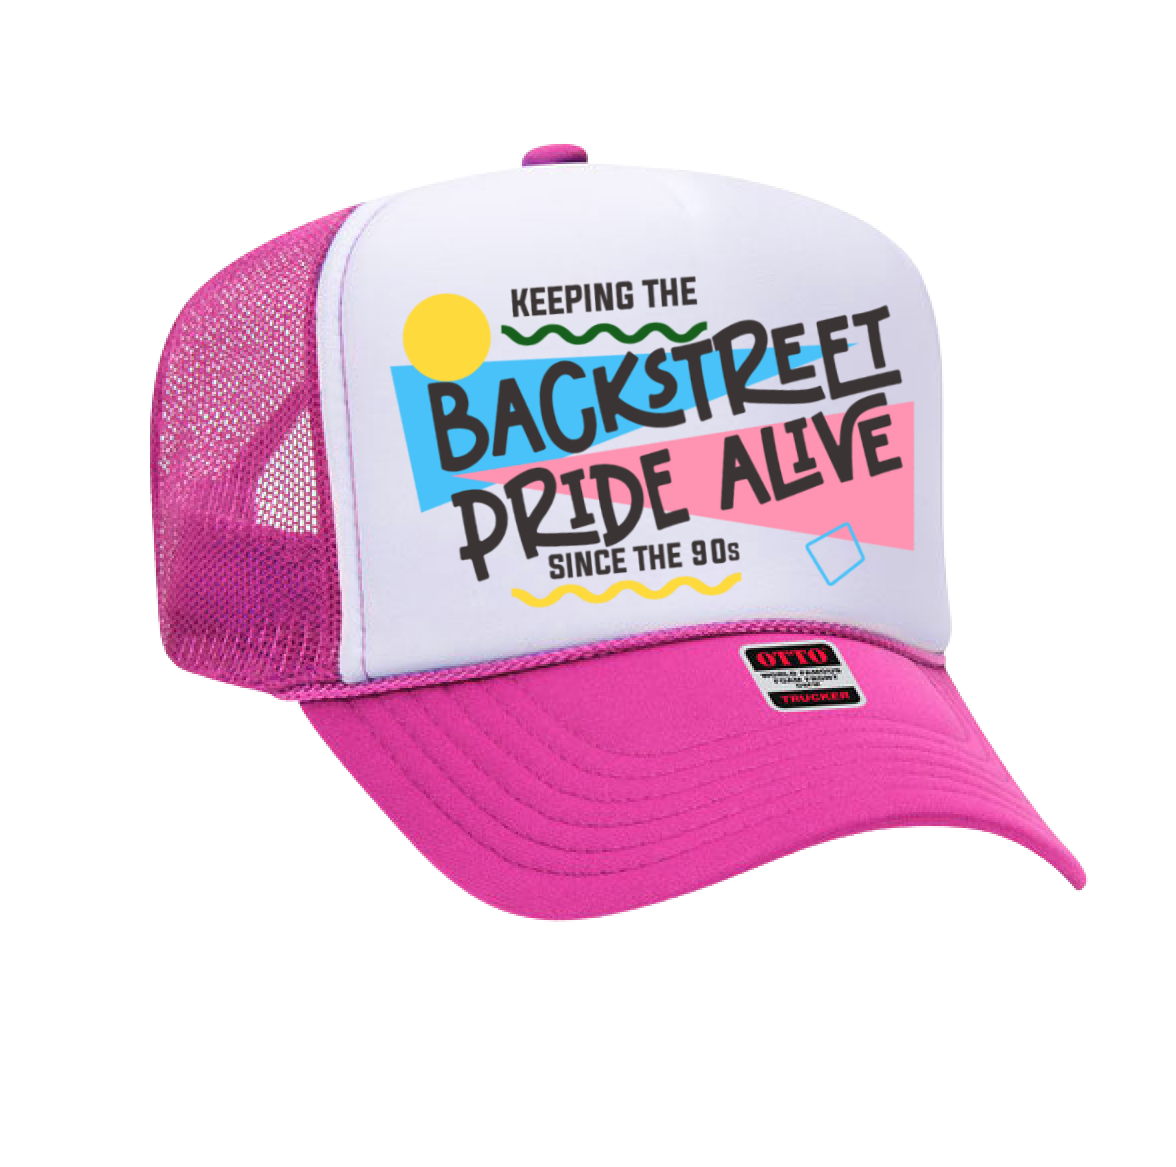 Keeping Backstreet Pride Alive Since the 90's BSB Trucker Hat